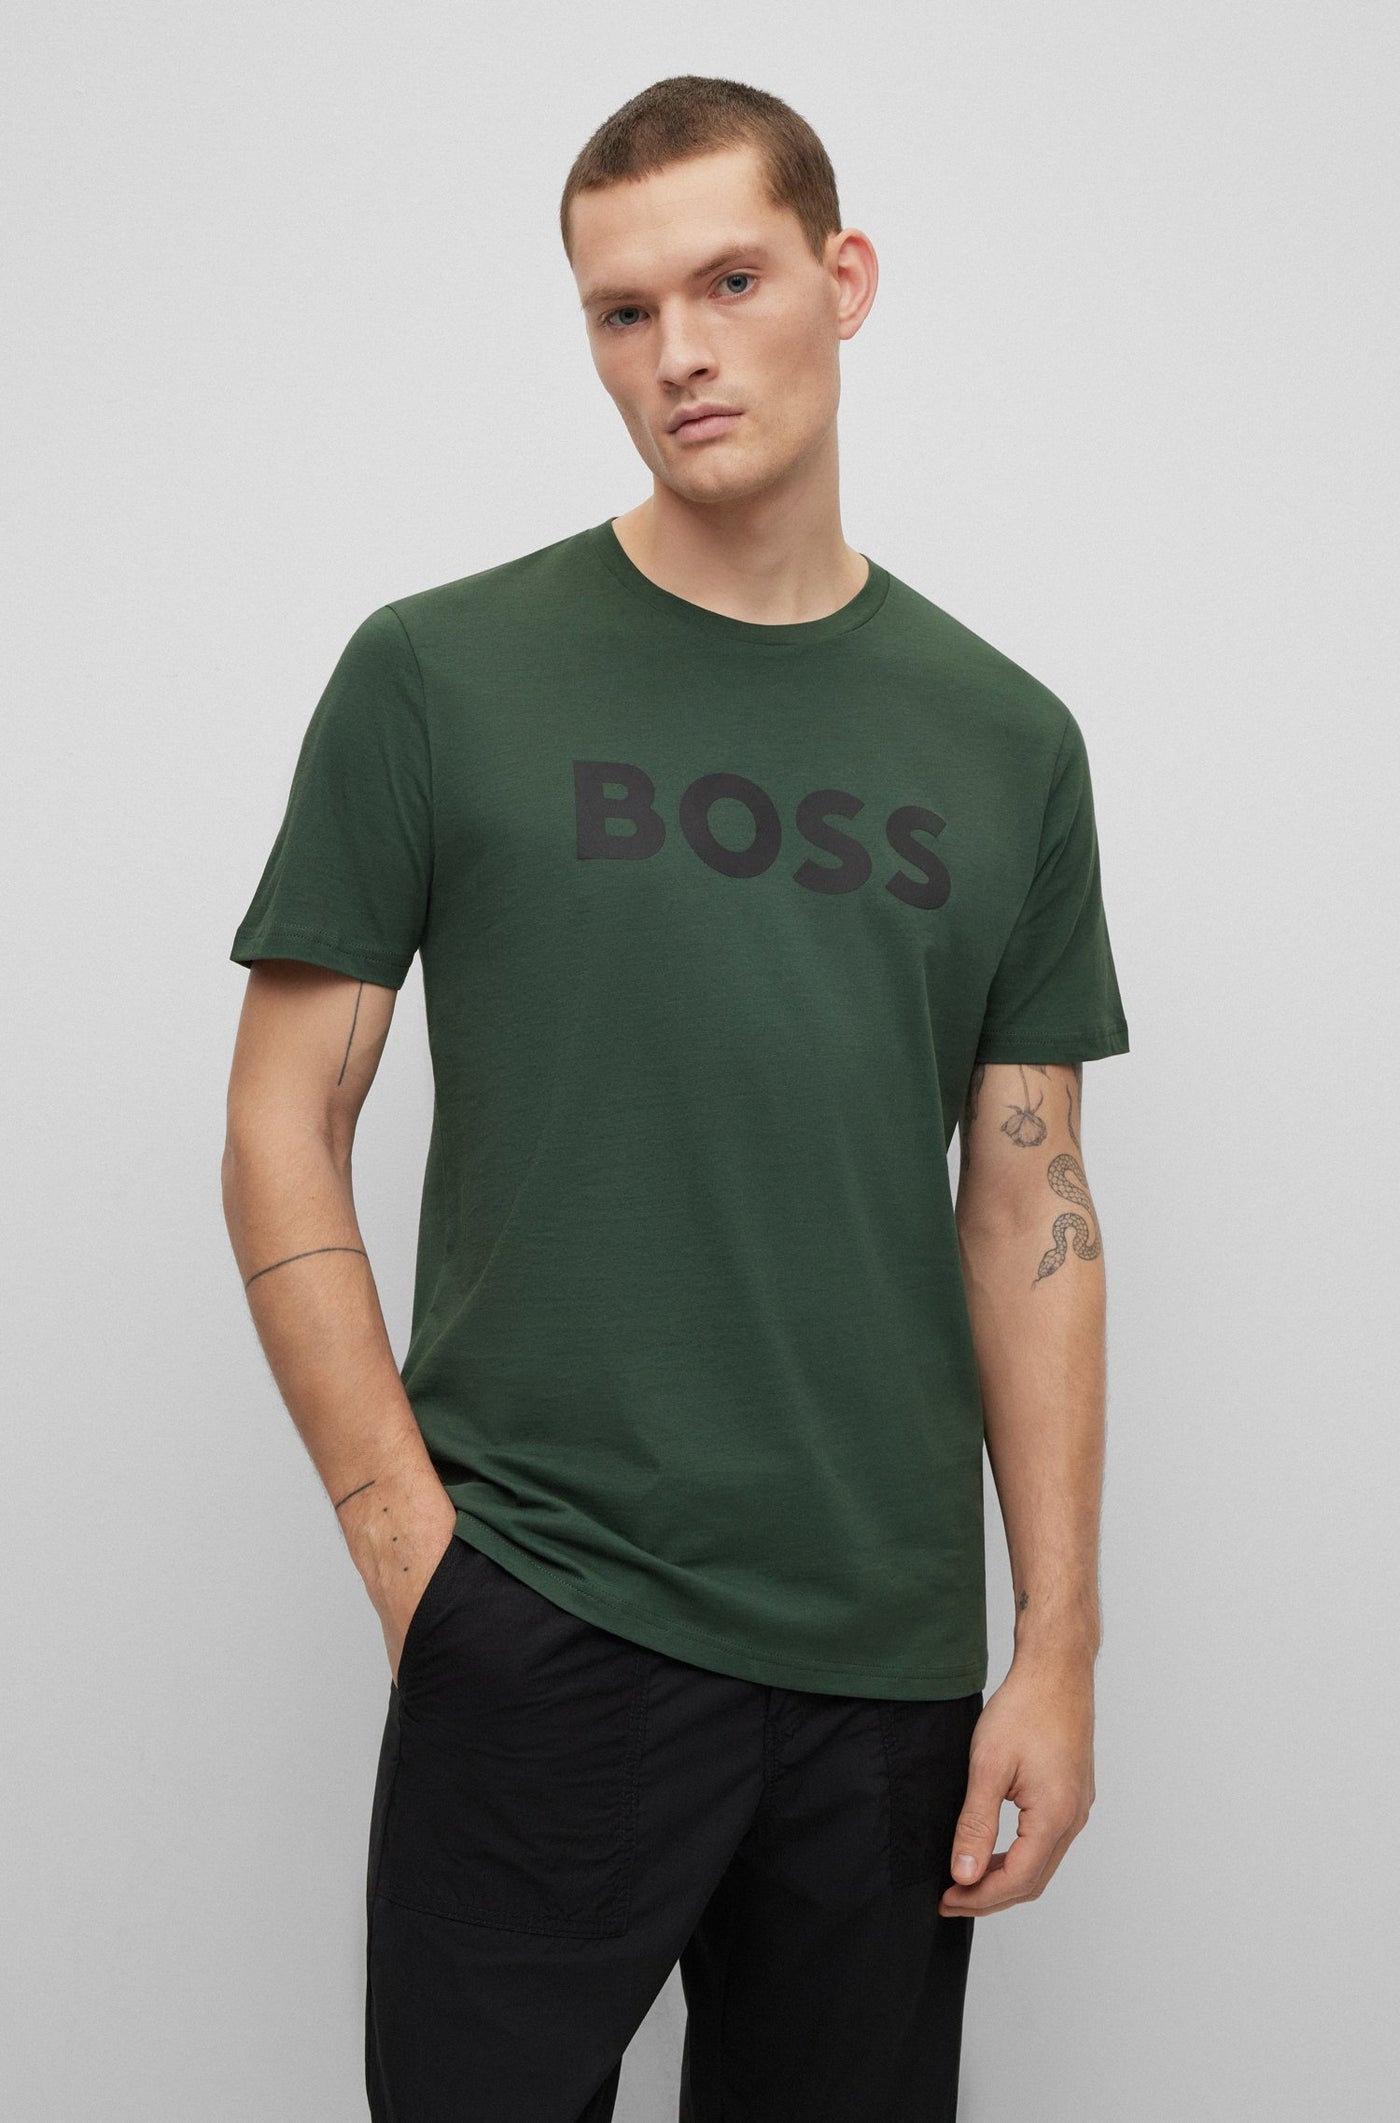 Men's Hugo Boss Thinking 1 T-shirt - Green